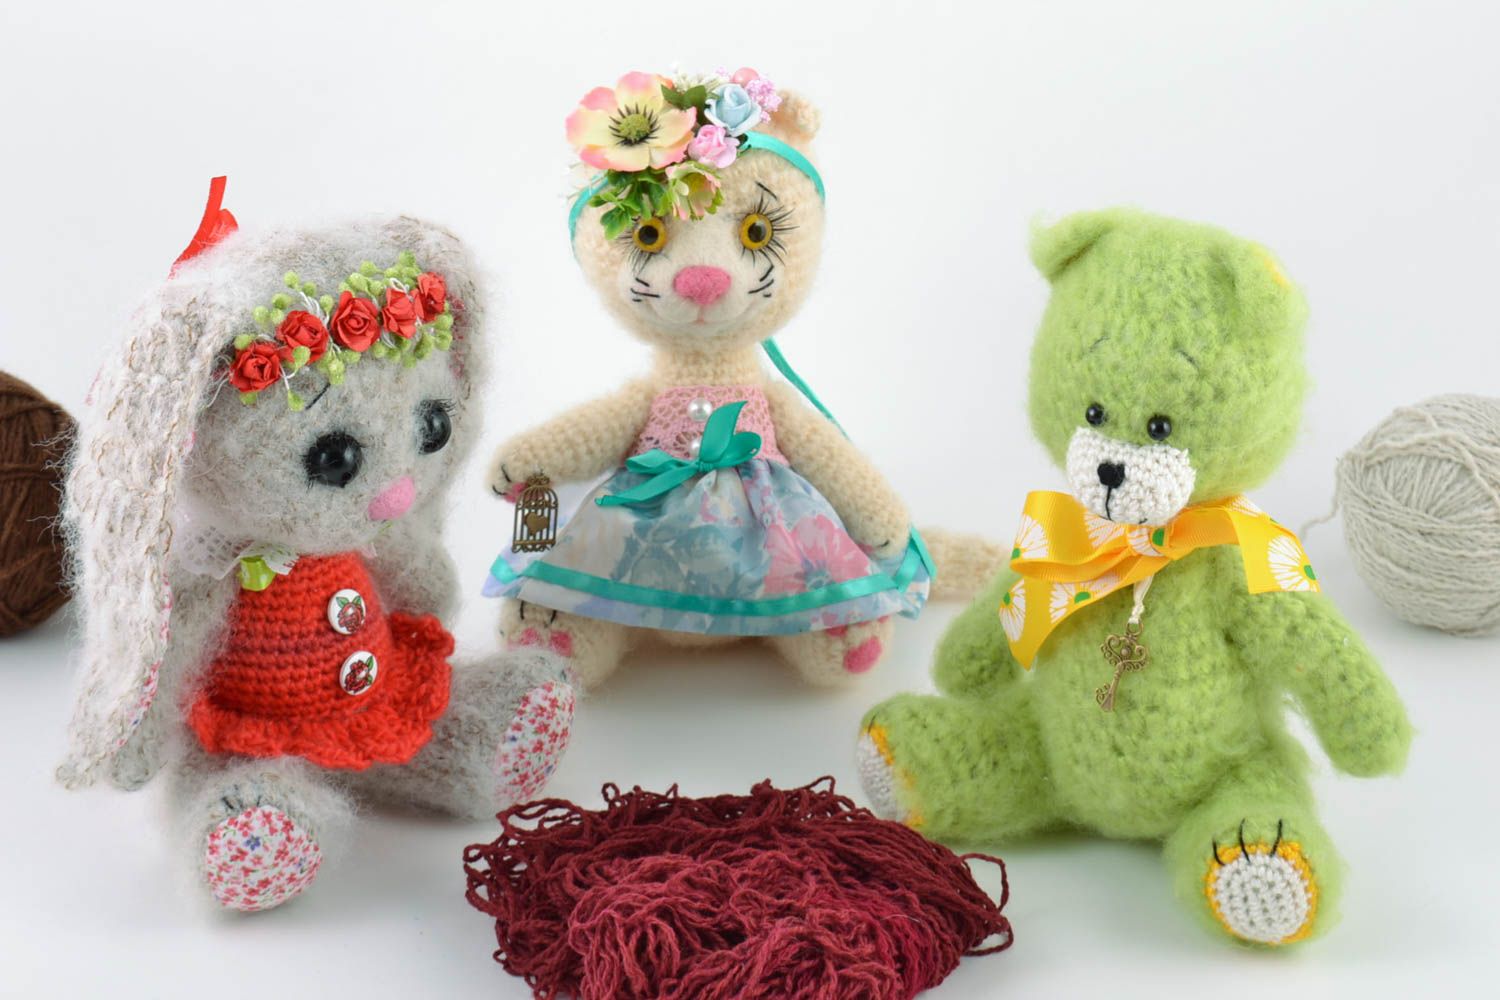 Handmade set of crocheted toys 3 beautiful animals for children game photo 1